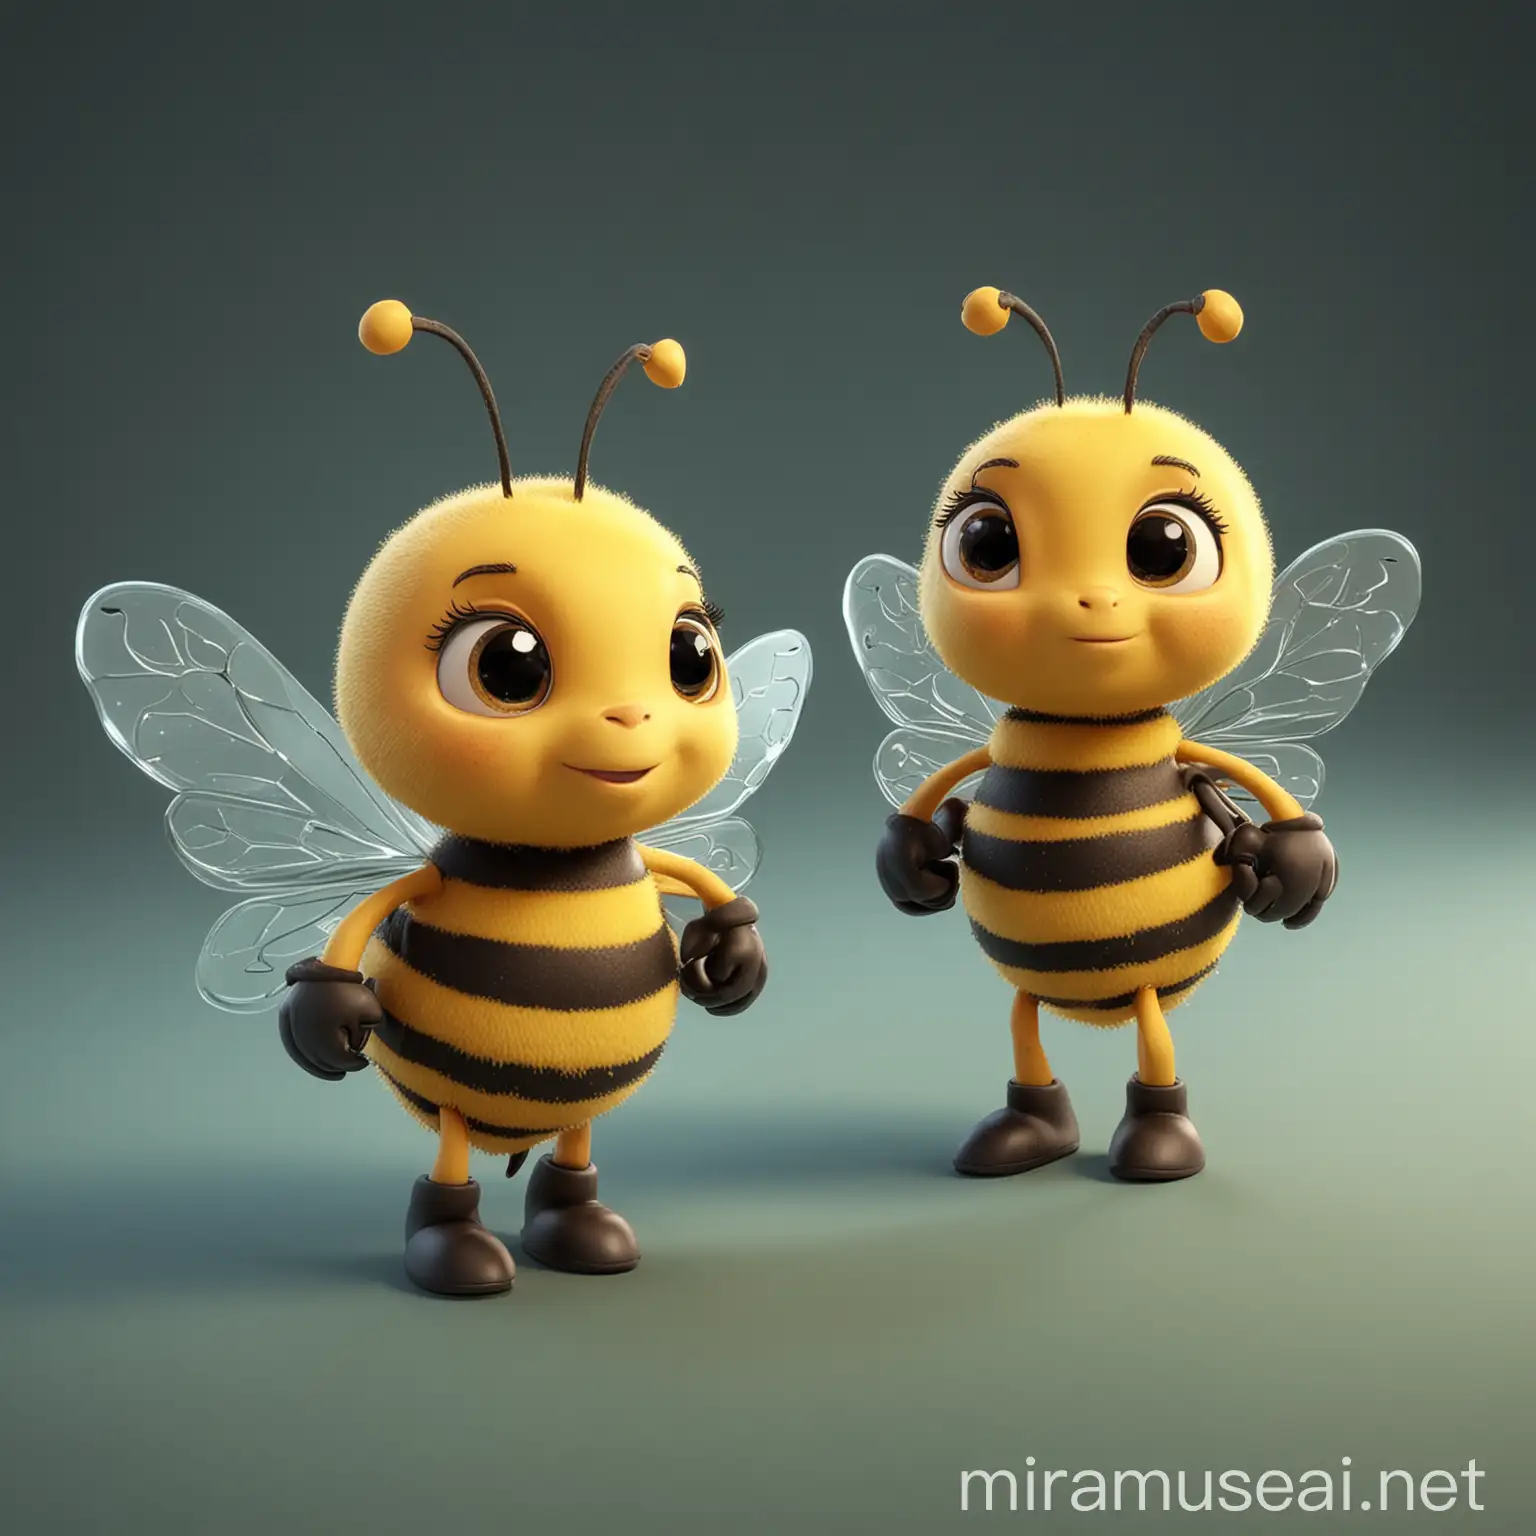 Adorable Cartoon 3D Little Bee in Vibrant Environment